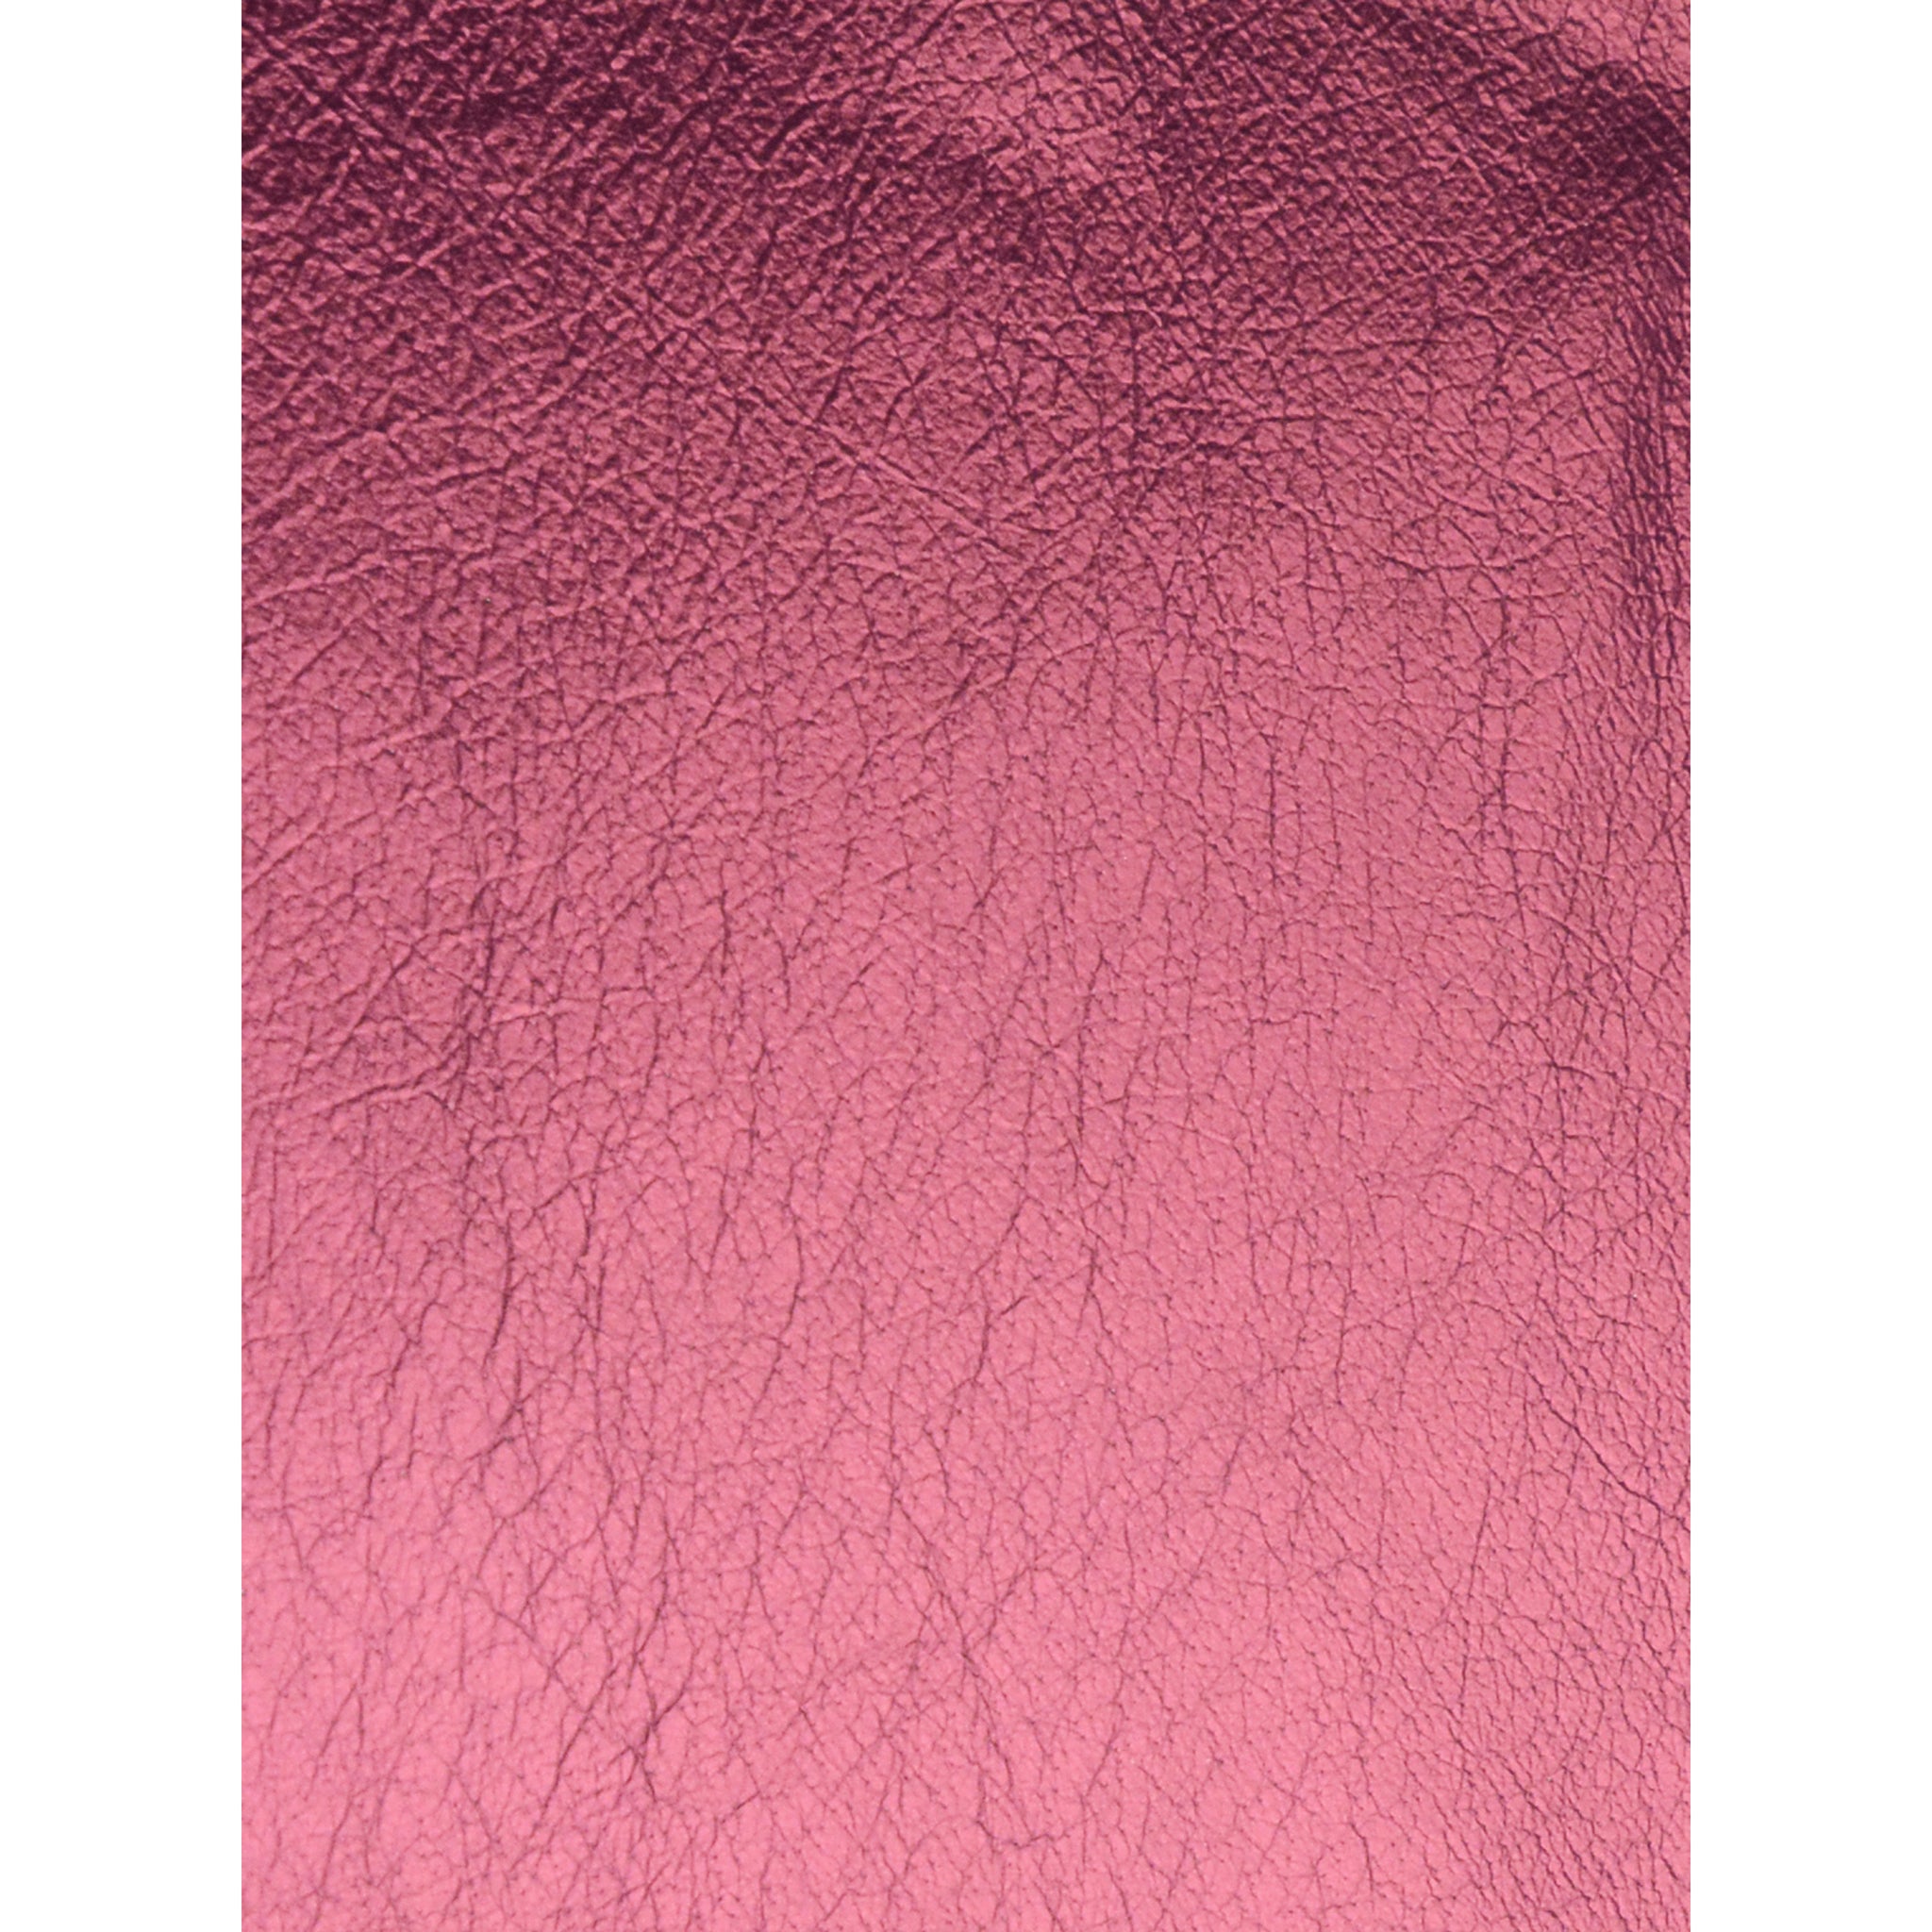 Bubblegum Pink Metallic Foil Leather from Identity Leathercraft